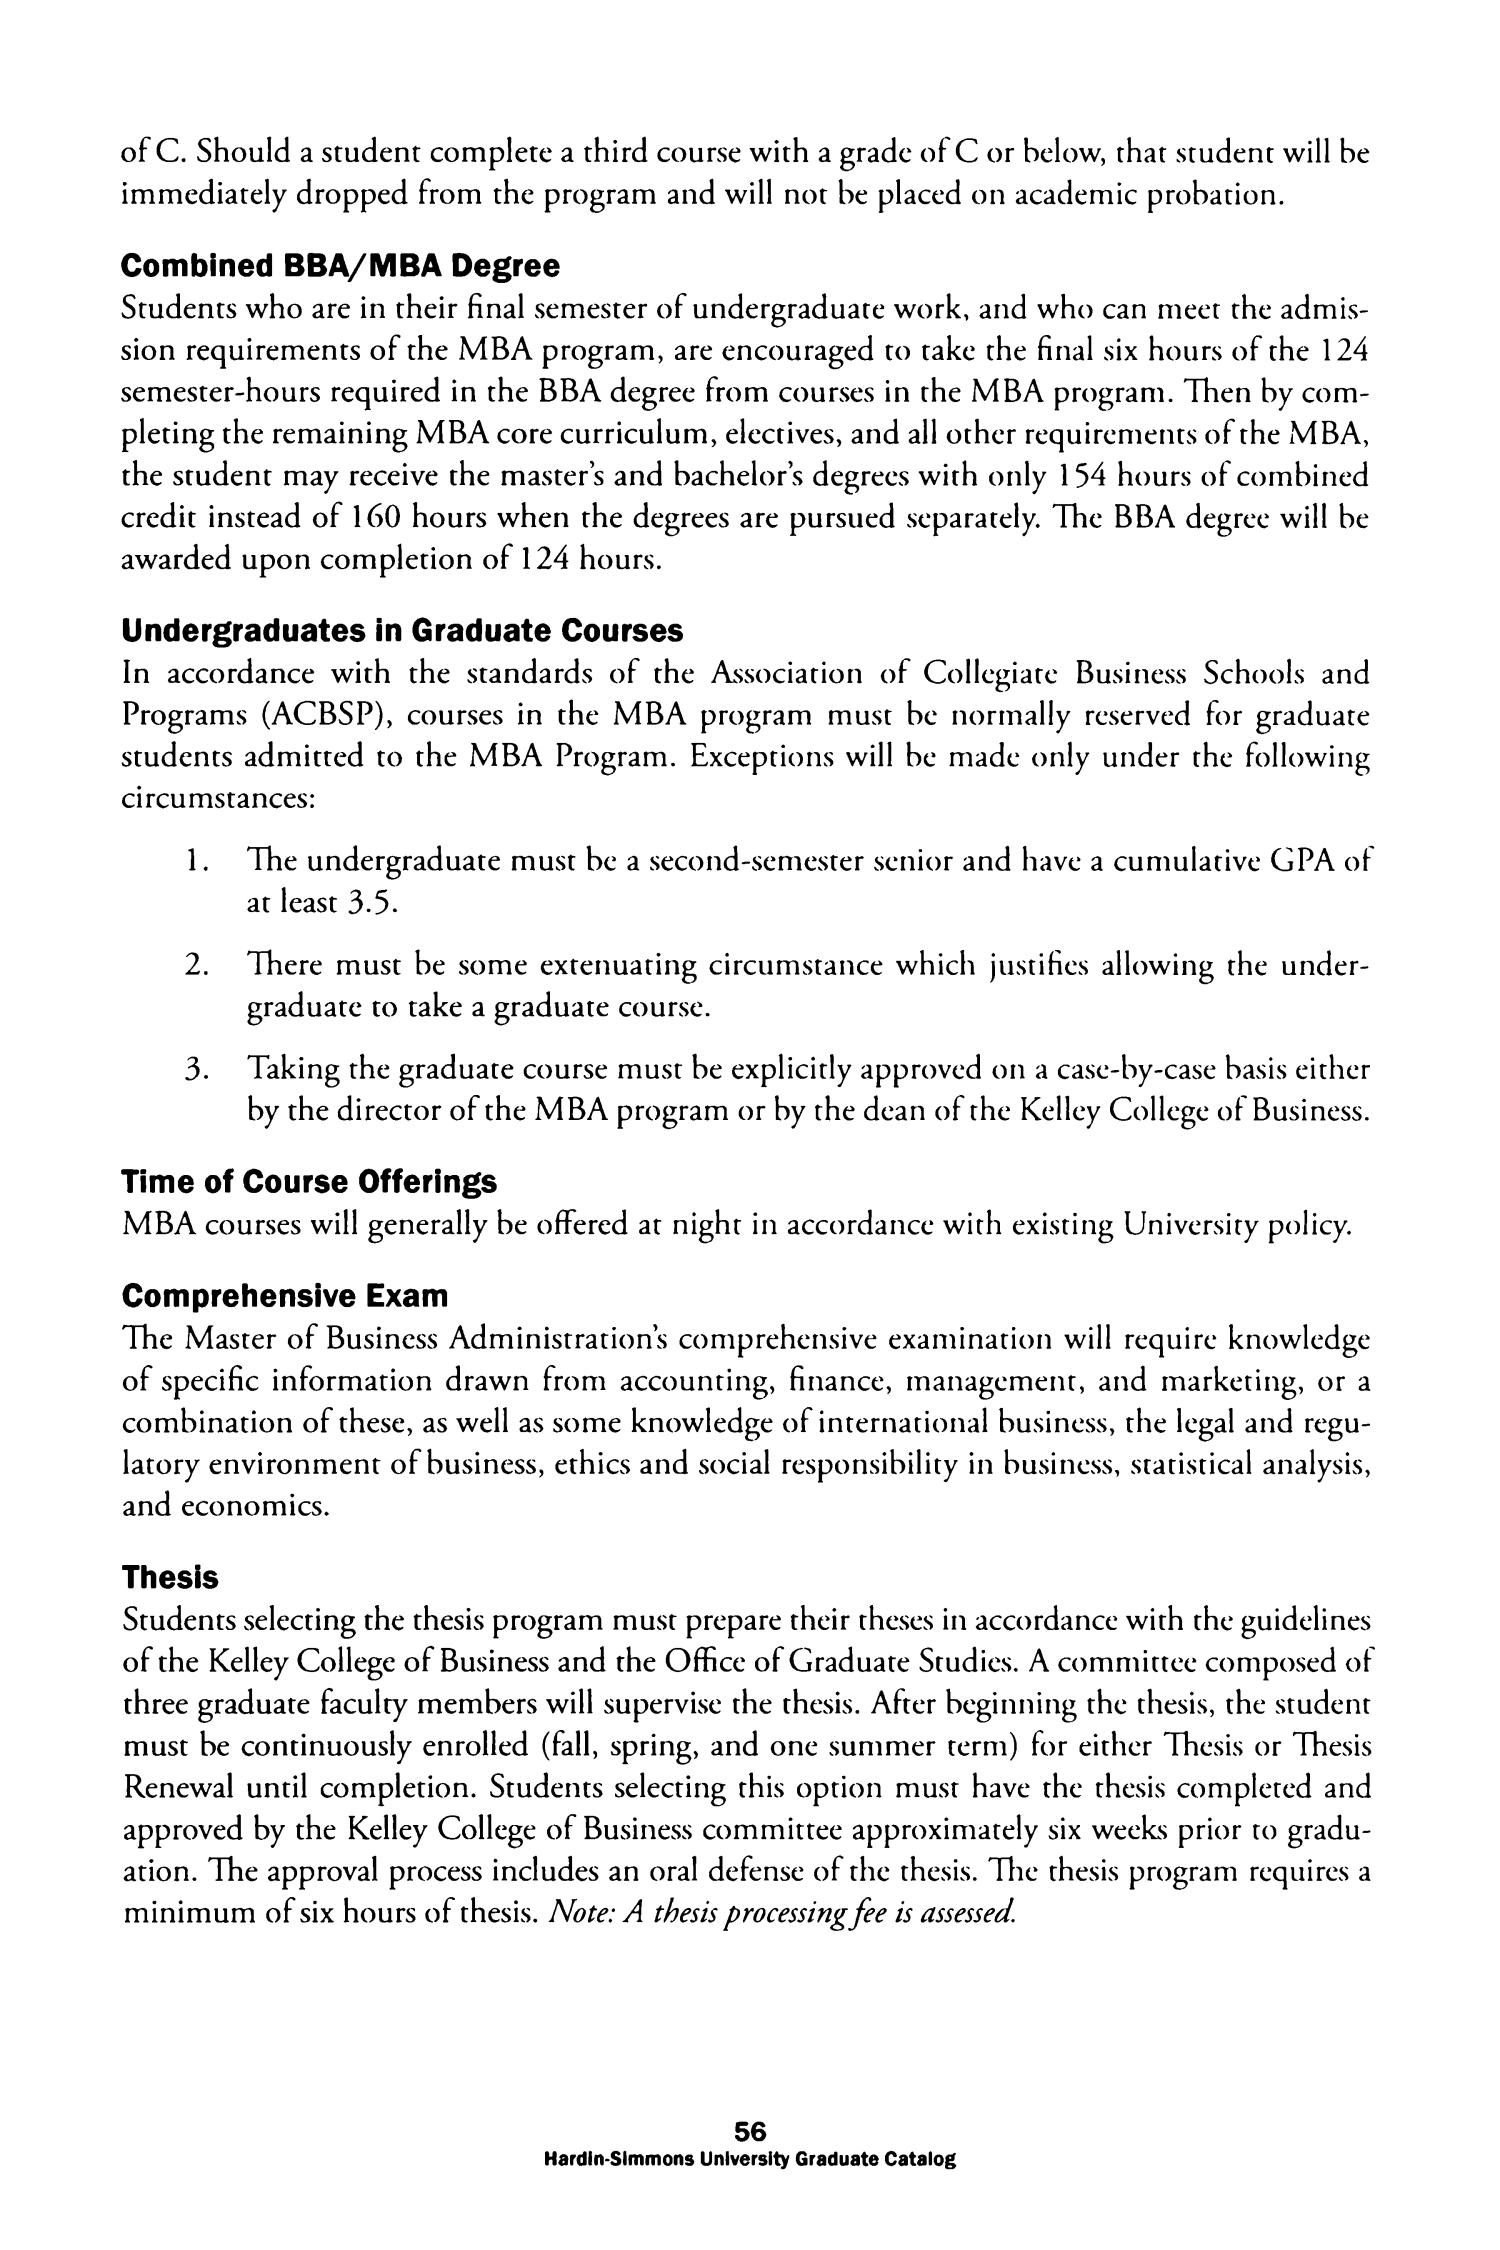 Catalog of Hardin-Simmons University, 2009-2010 Graduate Bulletin
                                                
                                                    56
                                                